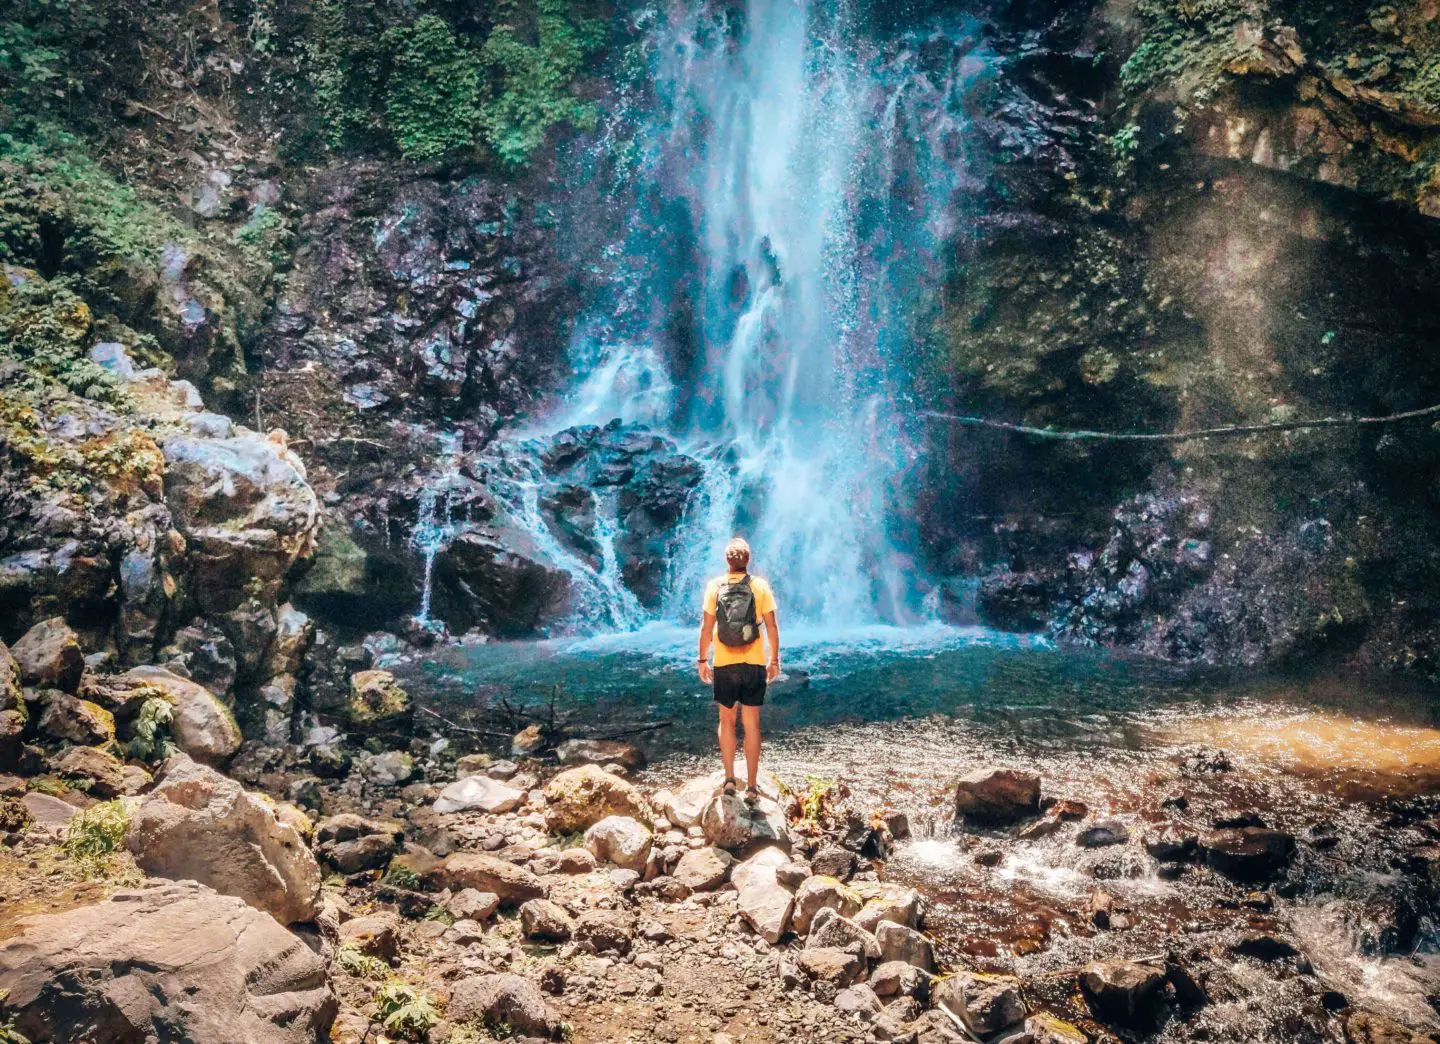 James at Melanting Waterfall in Munduk Bali Indonesia